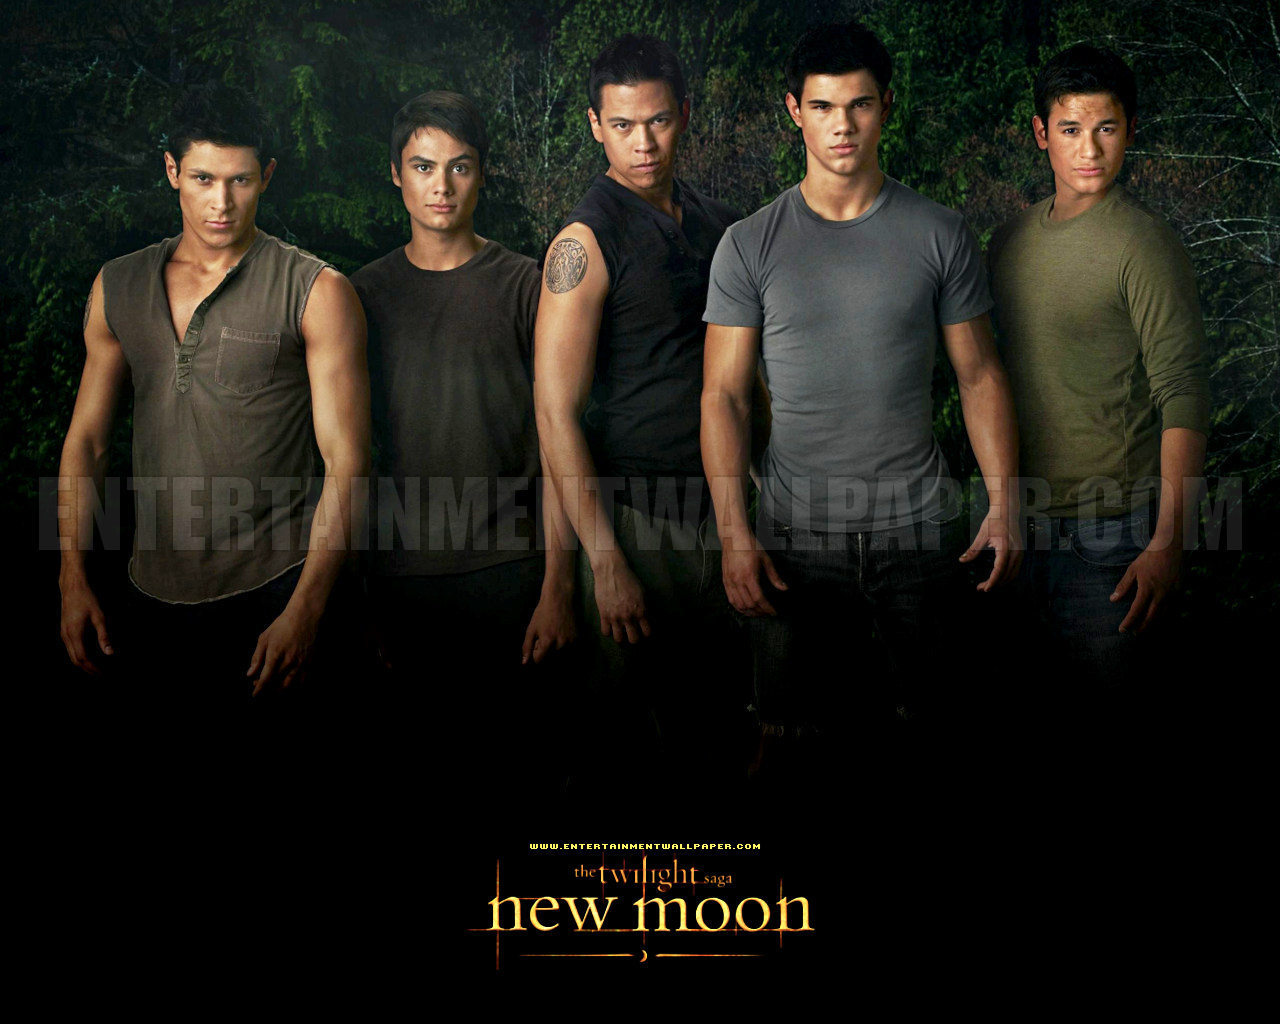 New Moon Movie Image Wallpaper Photos